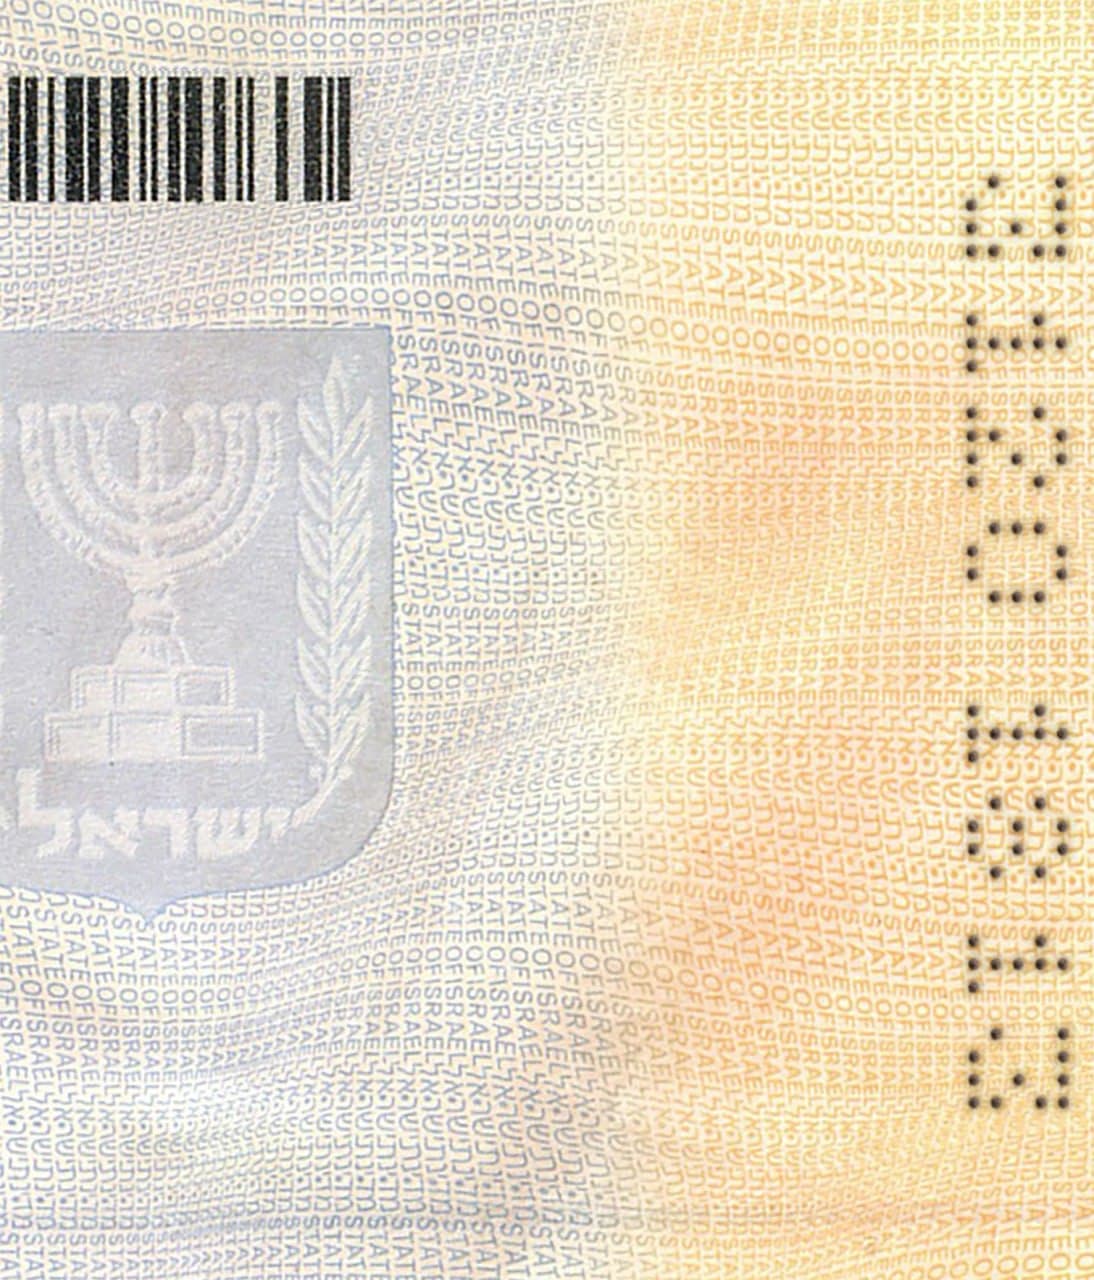 Israel Passport-2